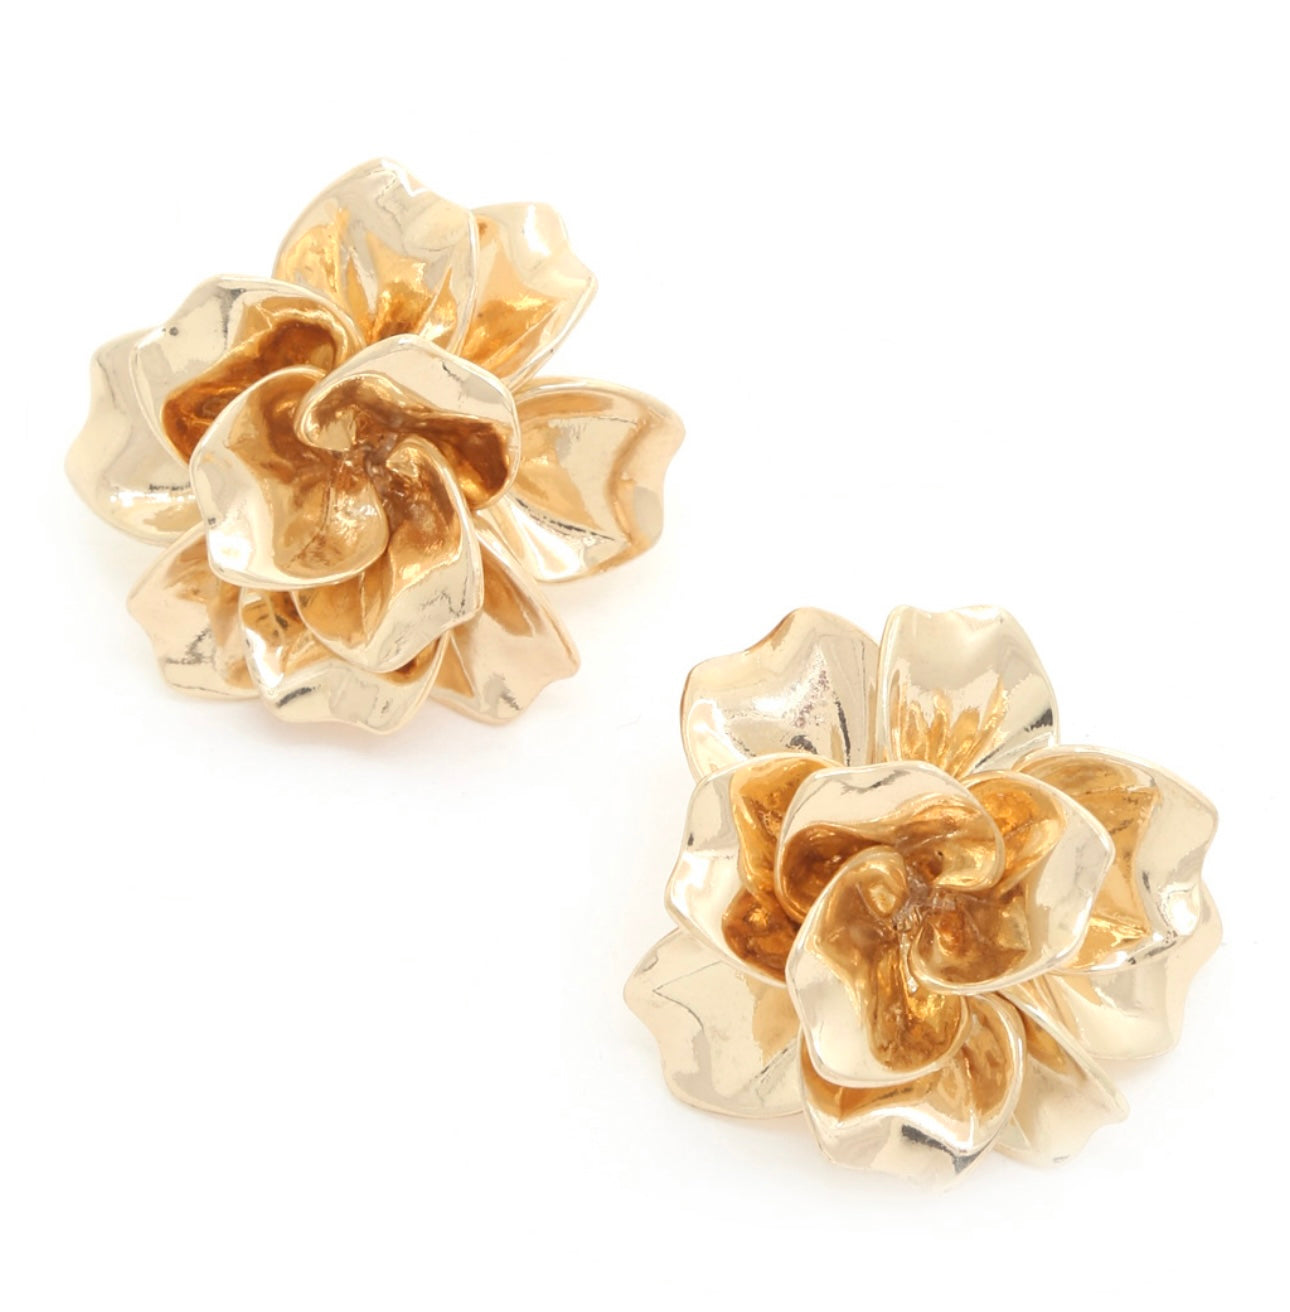 La Rosa earrings